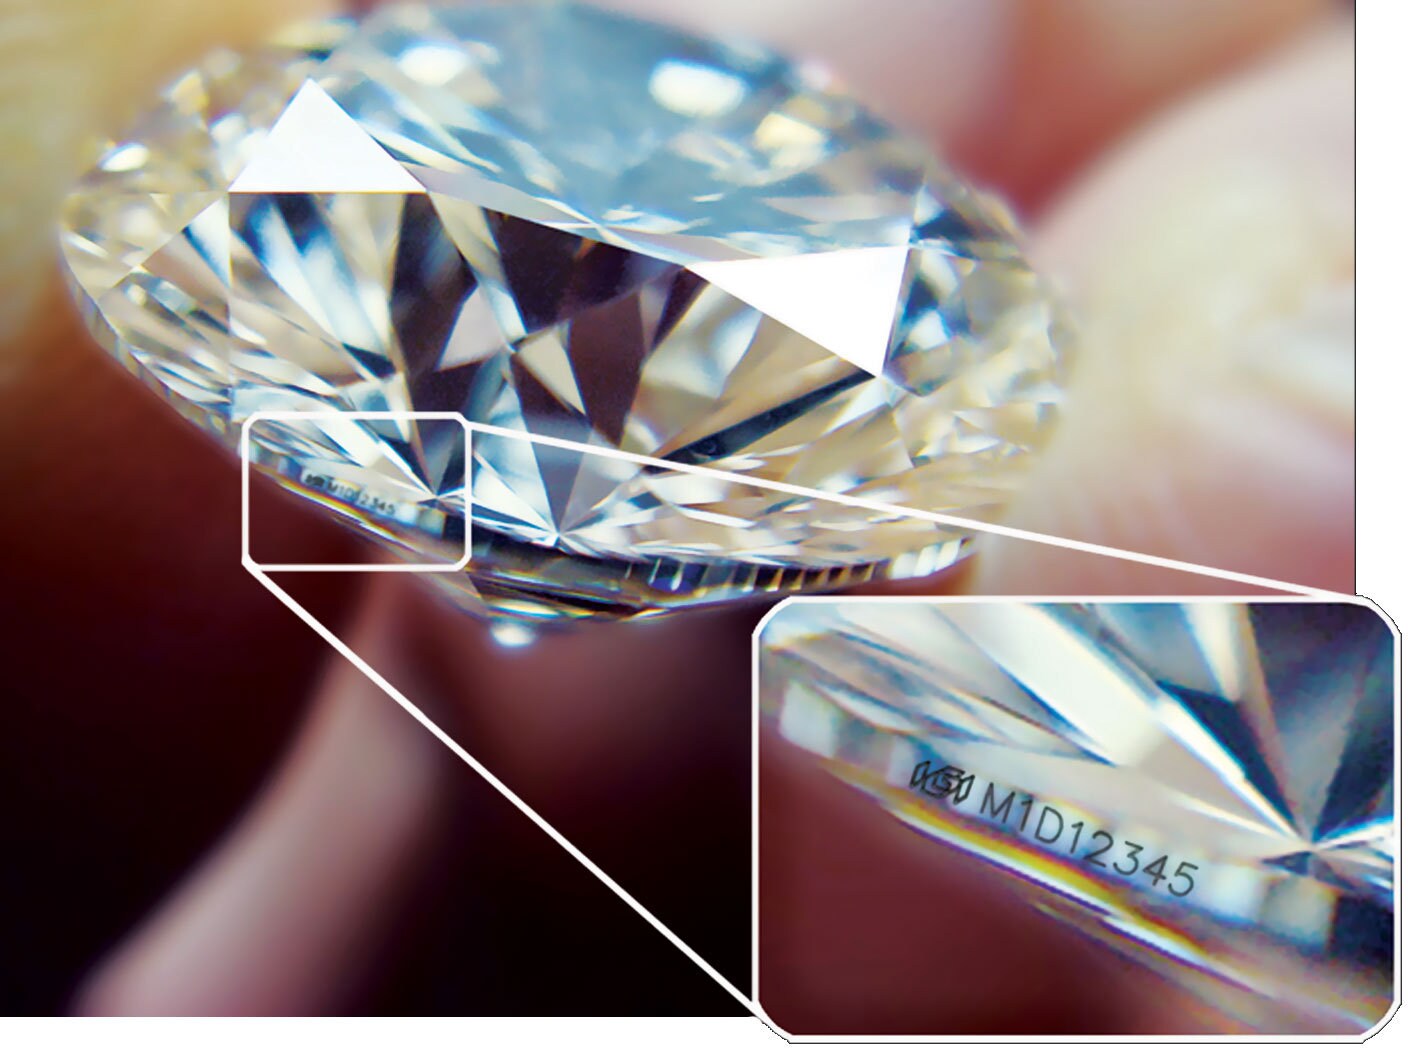 IGI Certified 1-Carat Round Lab Grown Loose Diamond VS1, F-Color